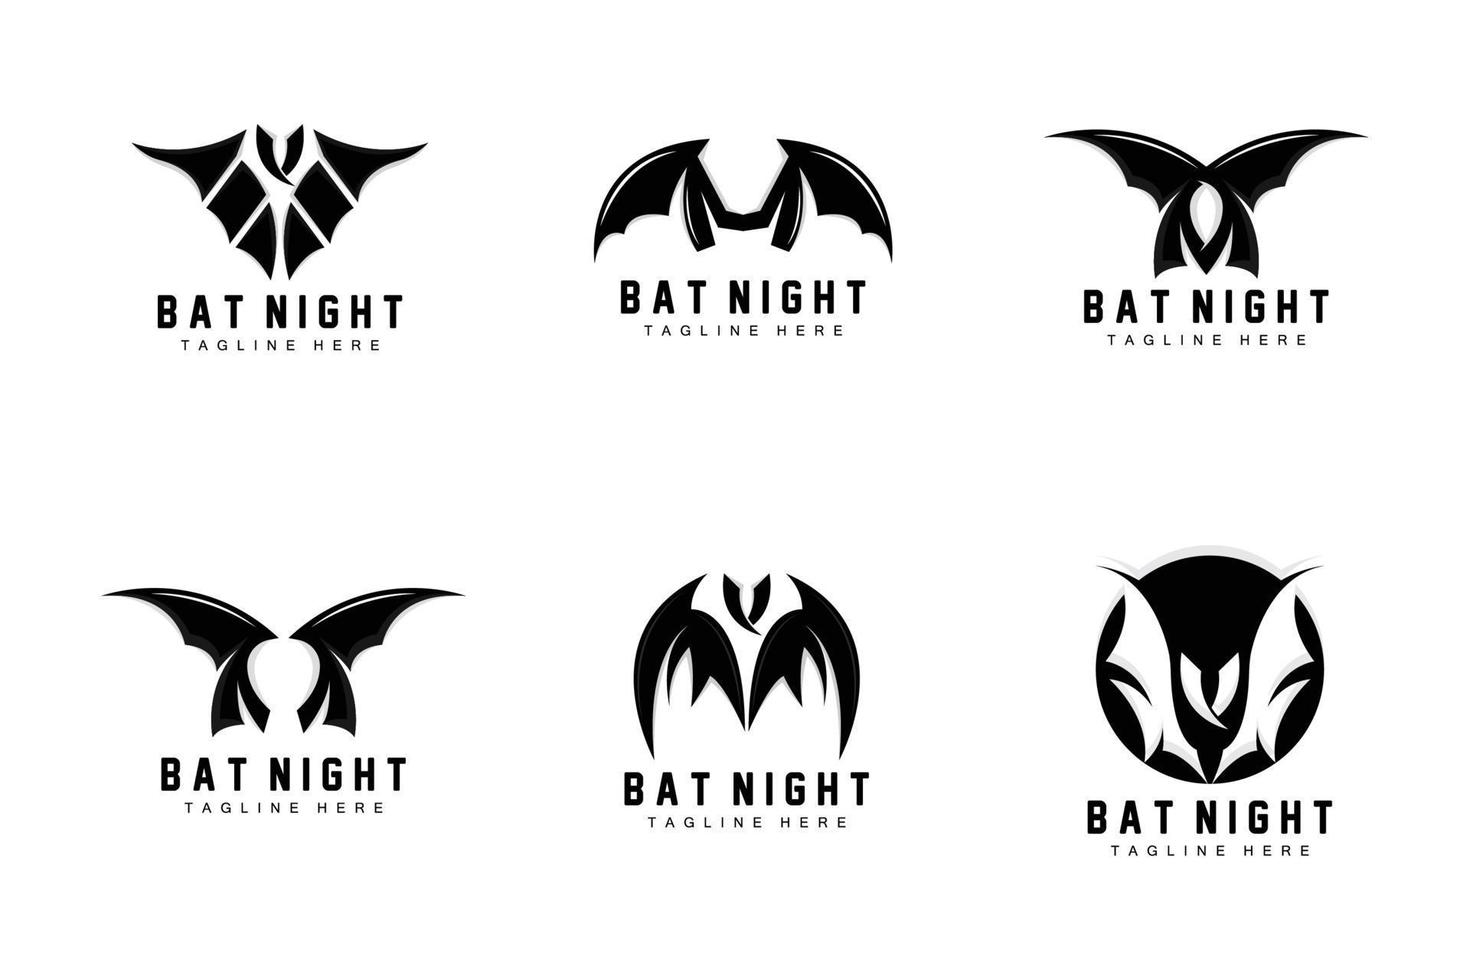 Bat Logo, Night Flying Animal Icon, Company Vector,Halloween Template vector